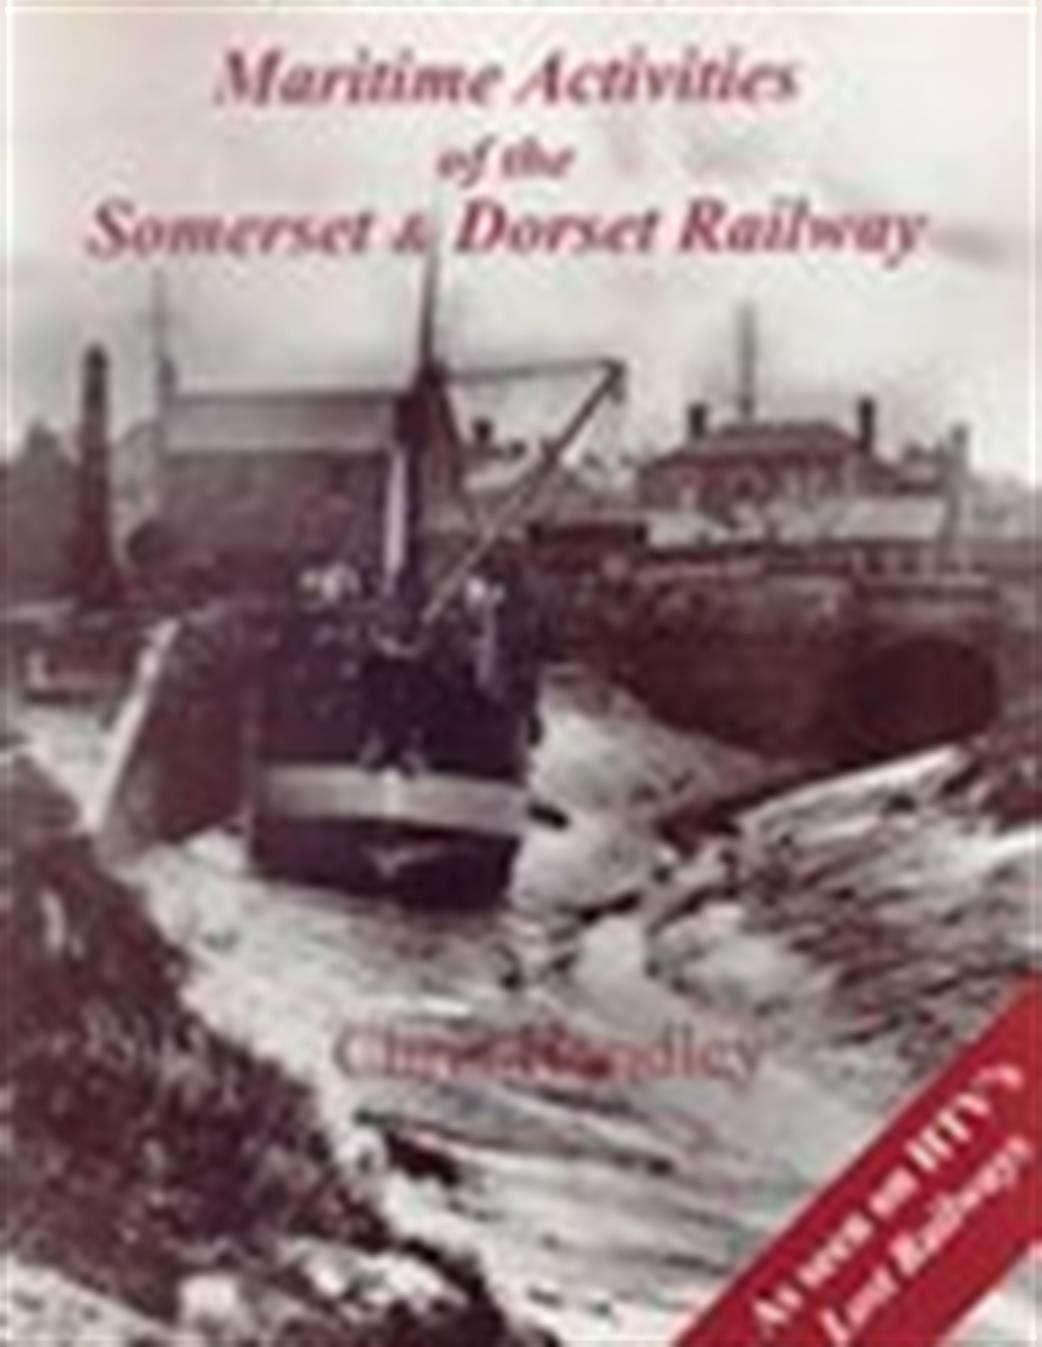 9780948975639 Maritime Activites of the Somerset & Dorset Railway By Chris Handley